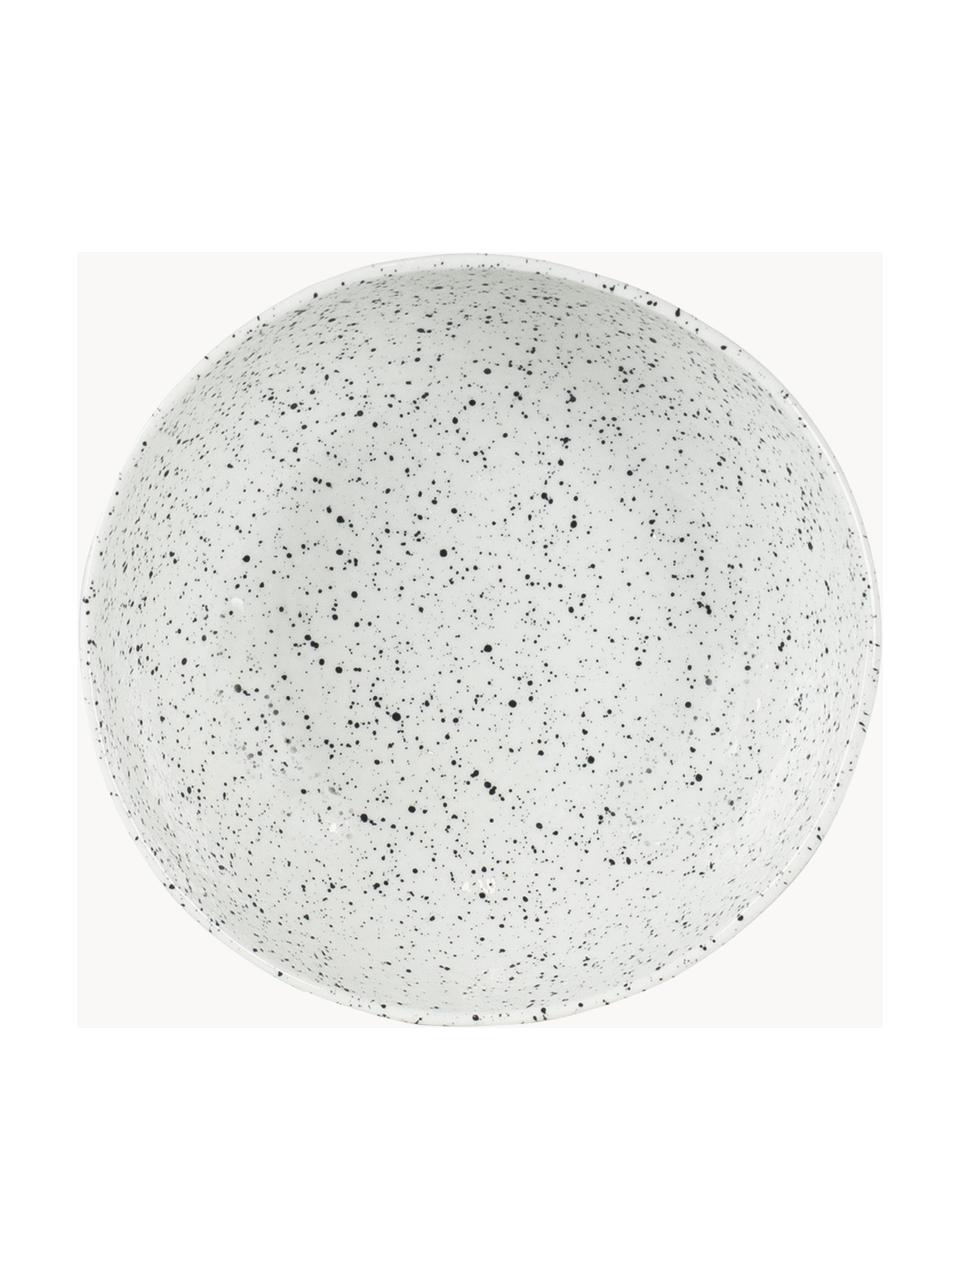 Piatto fondo in porcellana Poppi 2 pz, Porcellana, Bianco, nero maculato, Ø 20 x Alt. 8 cm